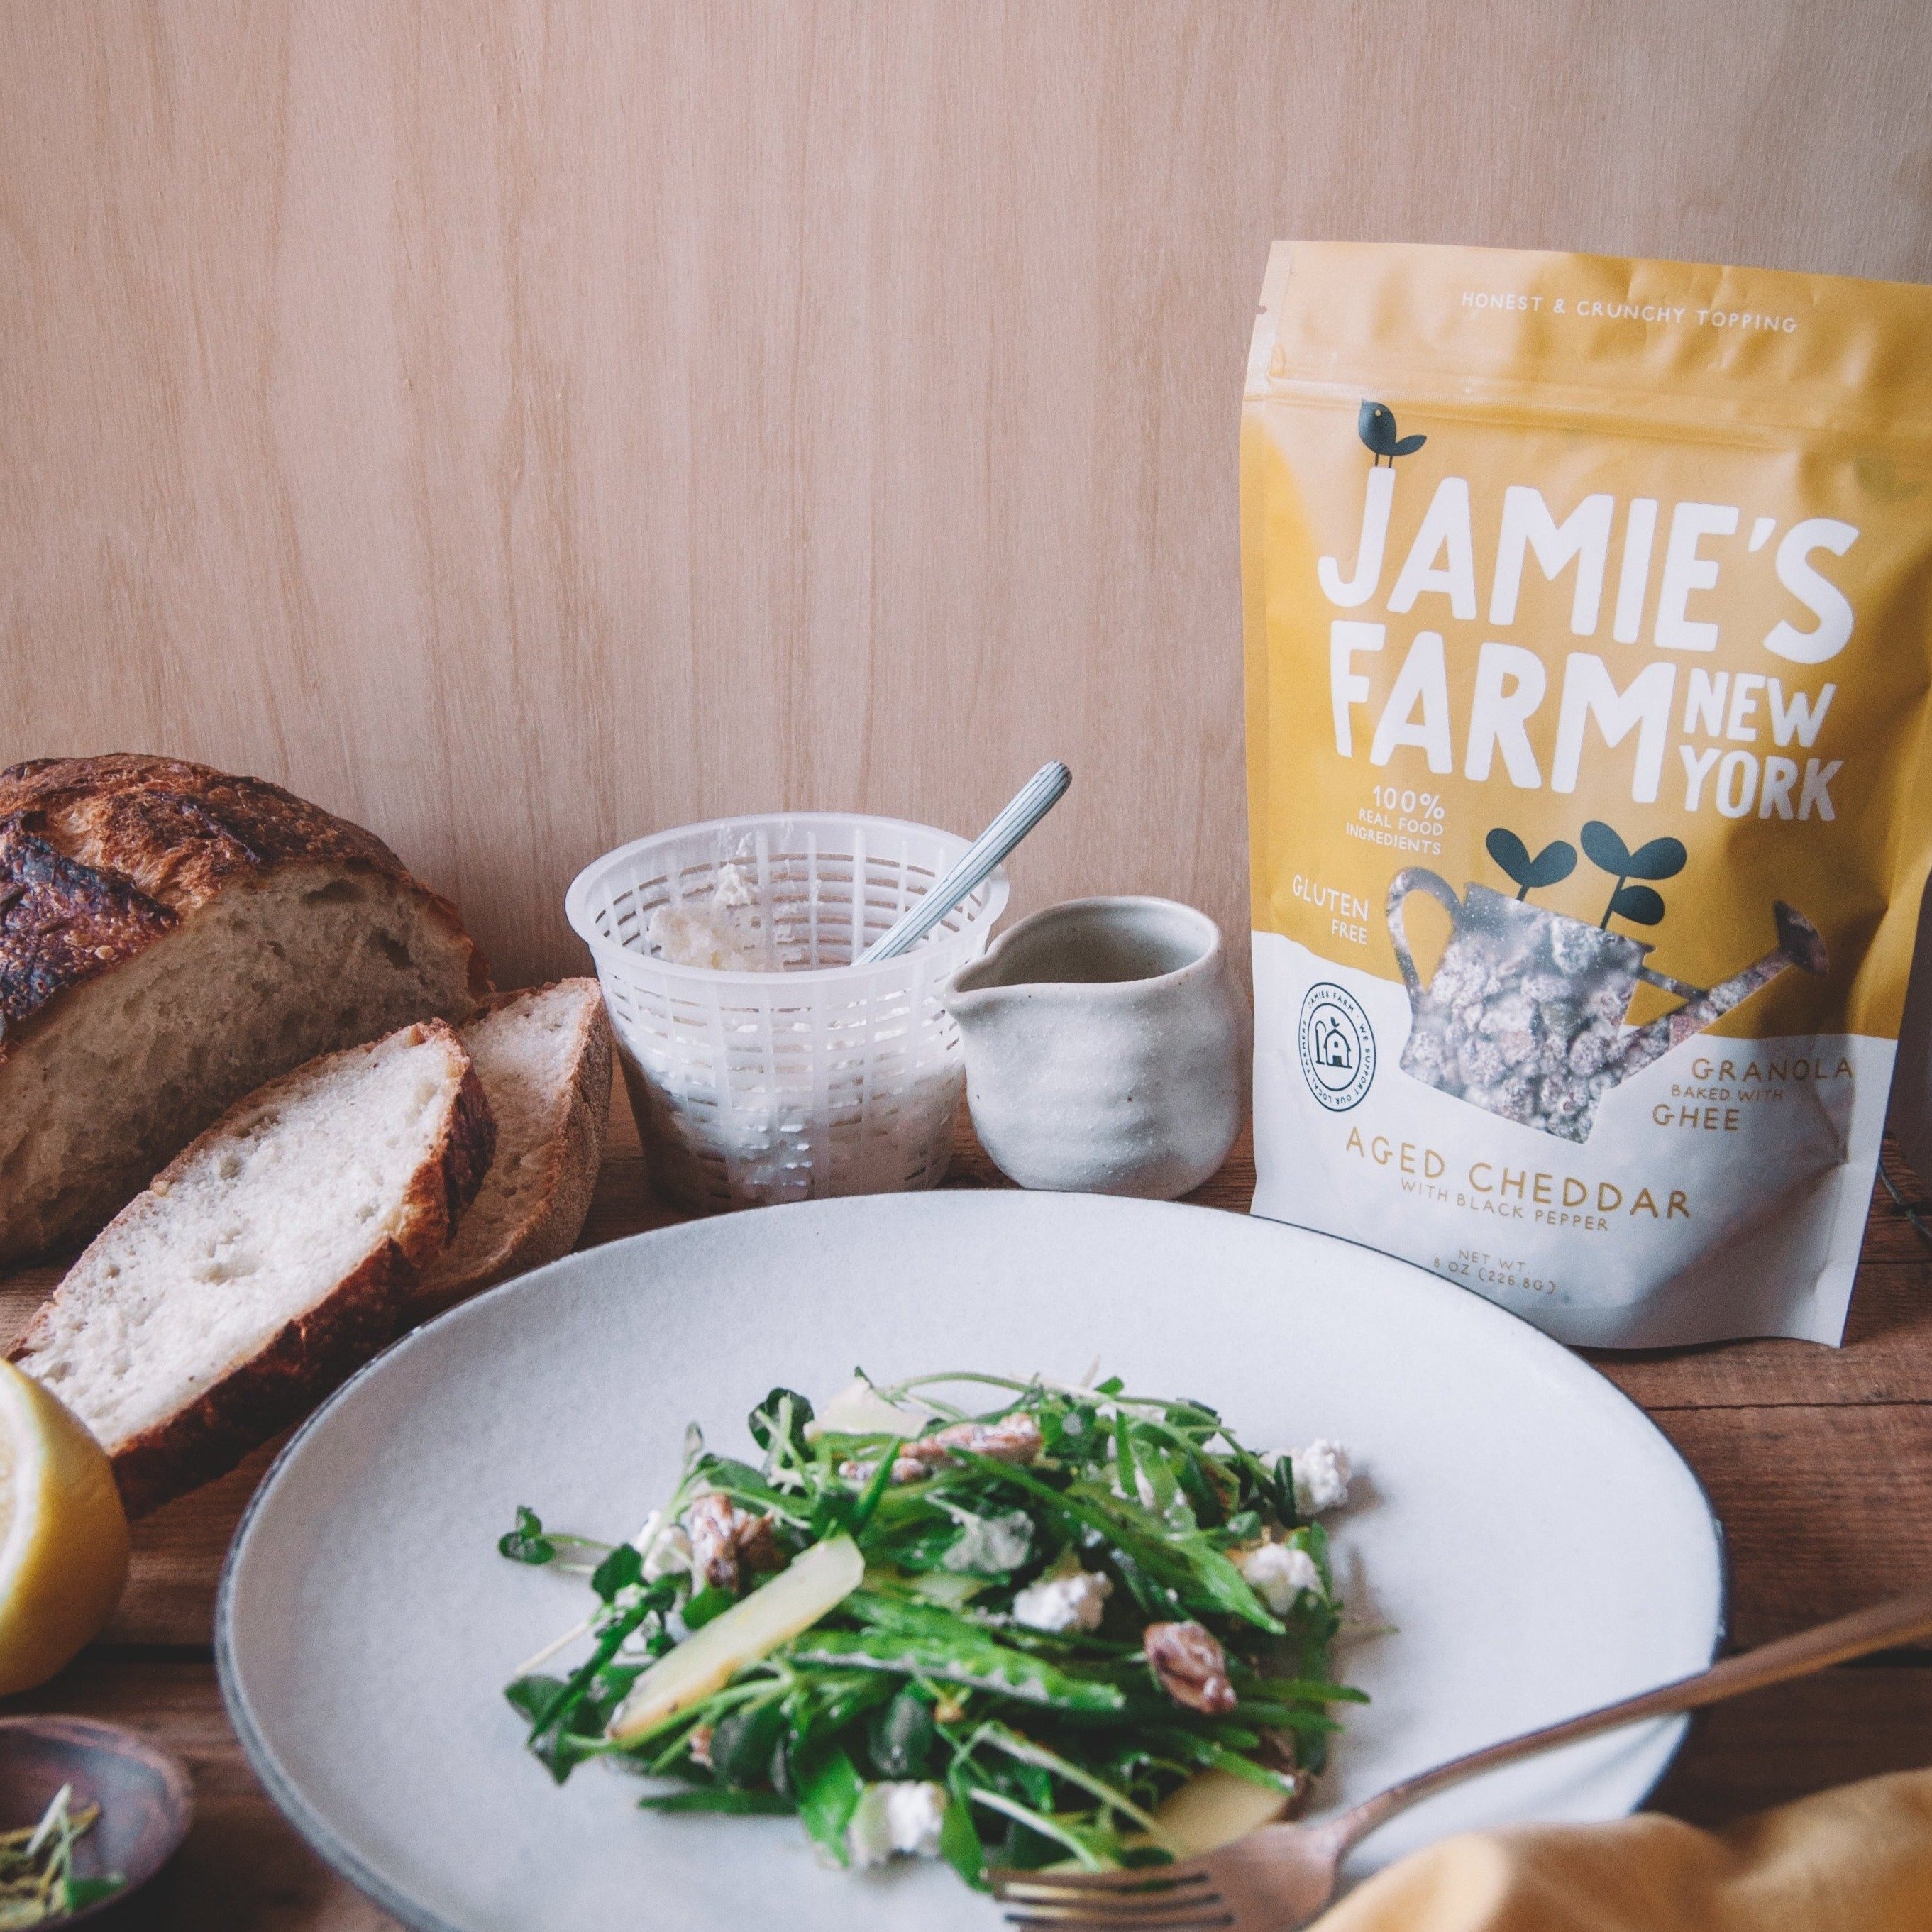 Jamie's Farm Granola Aged Cheddar on Sugar Snap Pea Salad